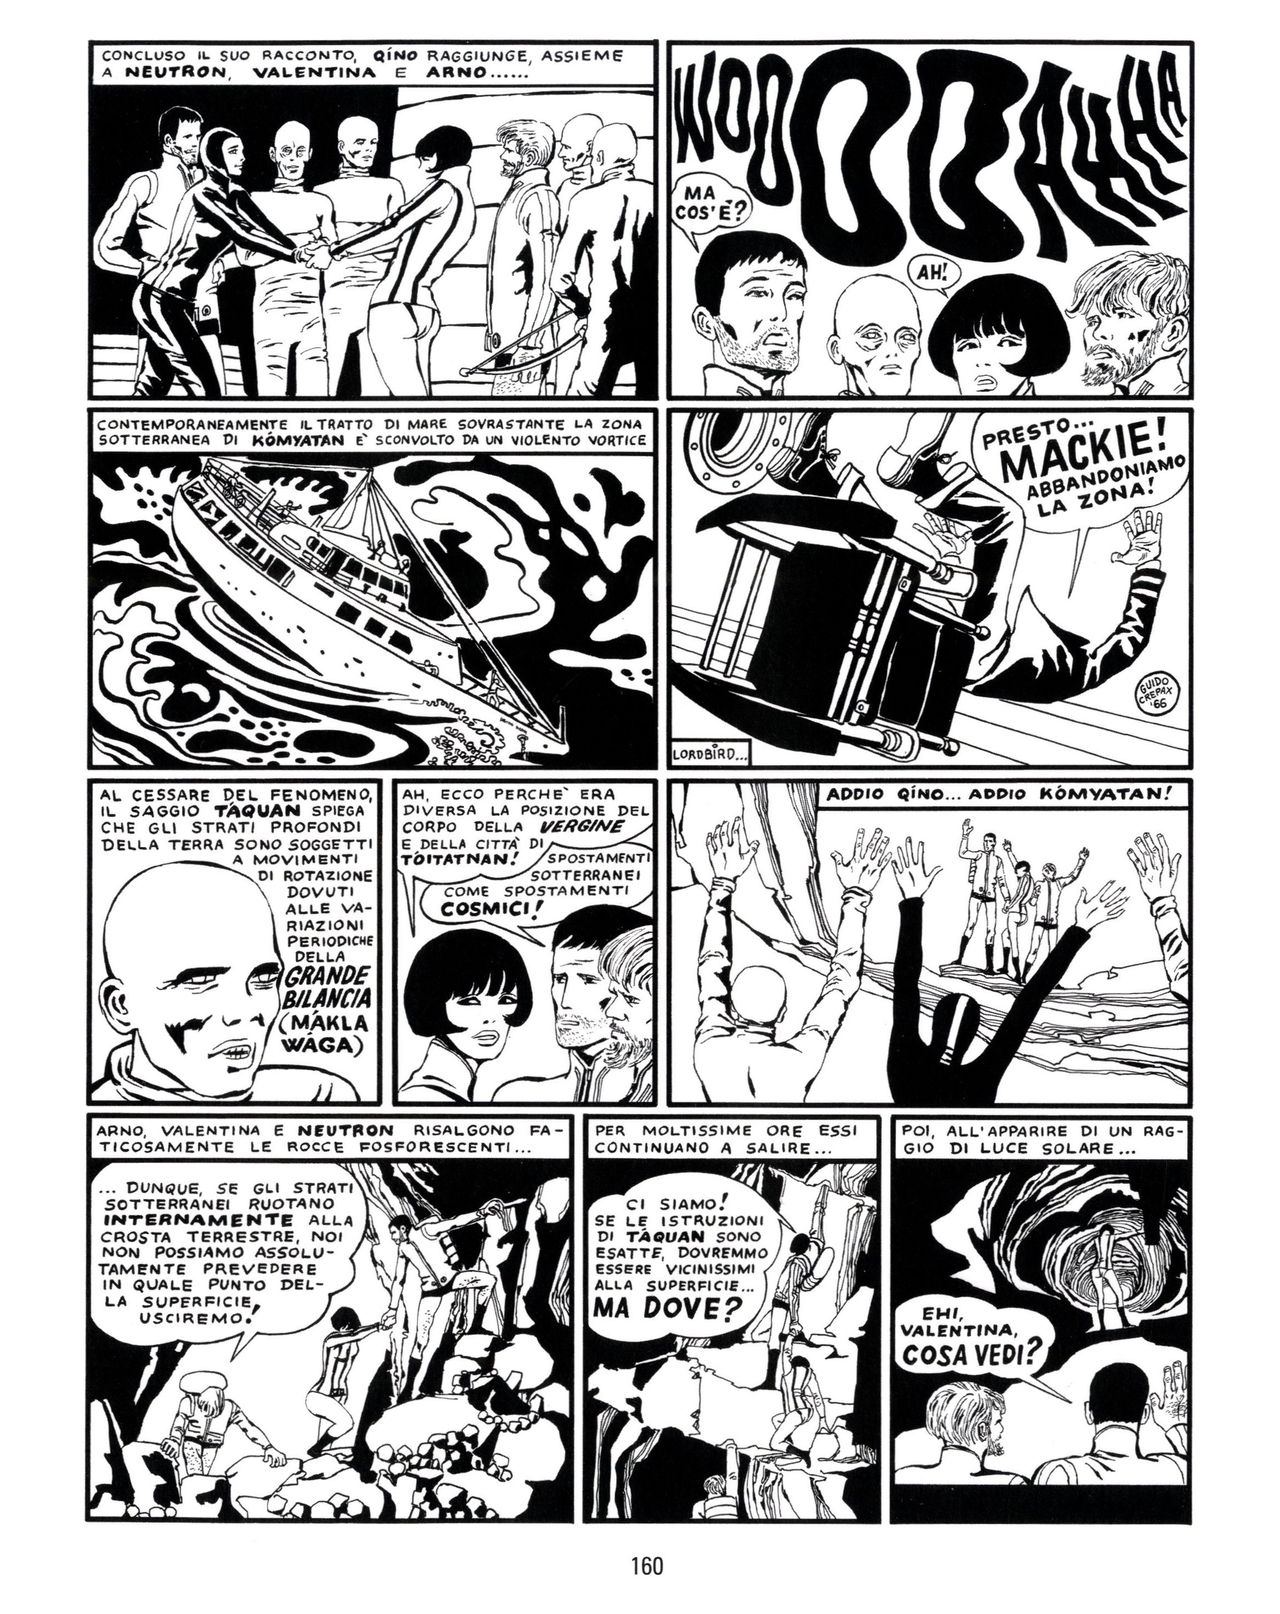 [Guido Crepax] Erotica Fumetti #25 : L'ascesa dei sotterranei : I cavalieri ciechi [Italian] 161